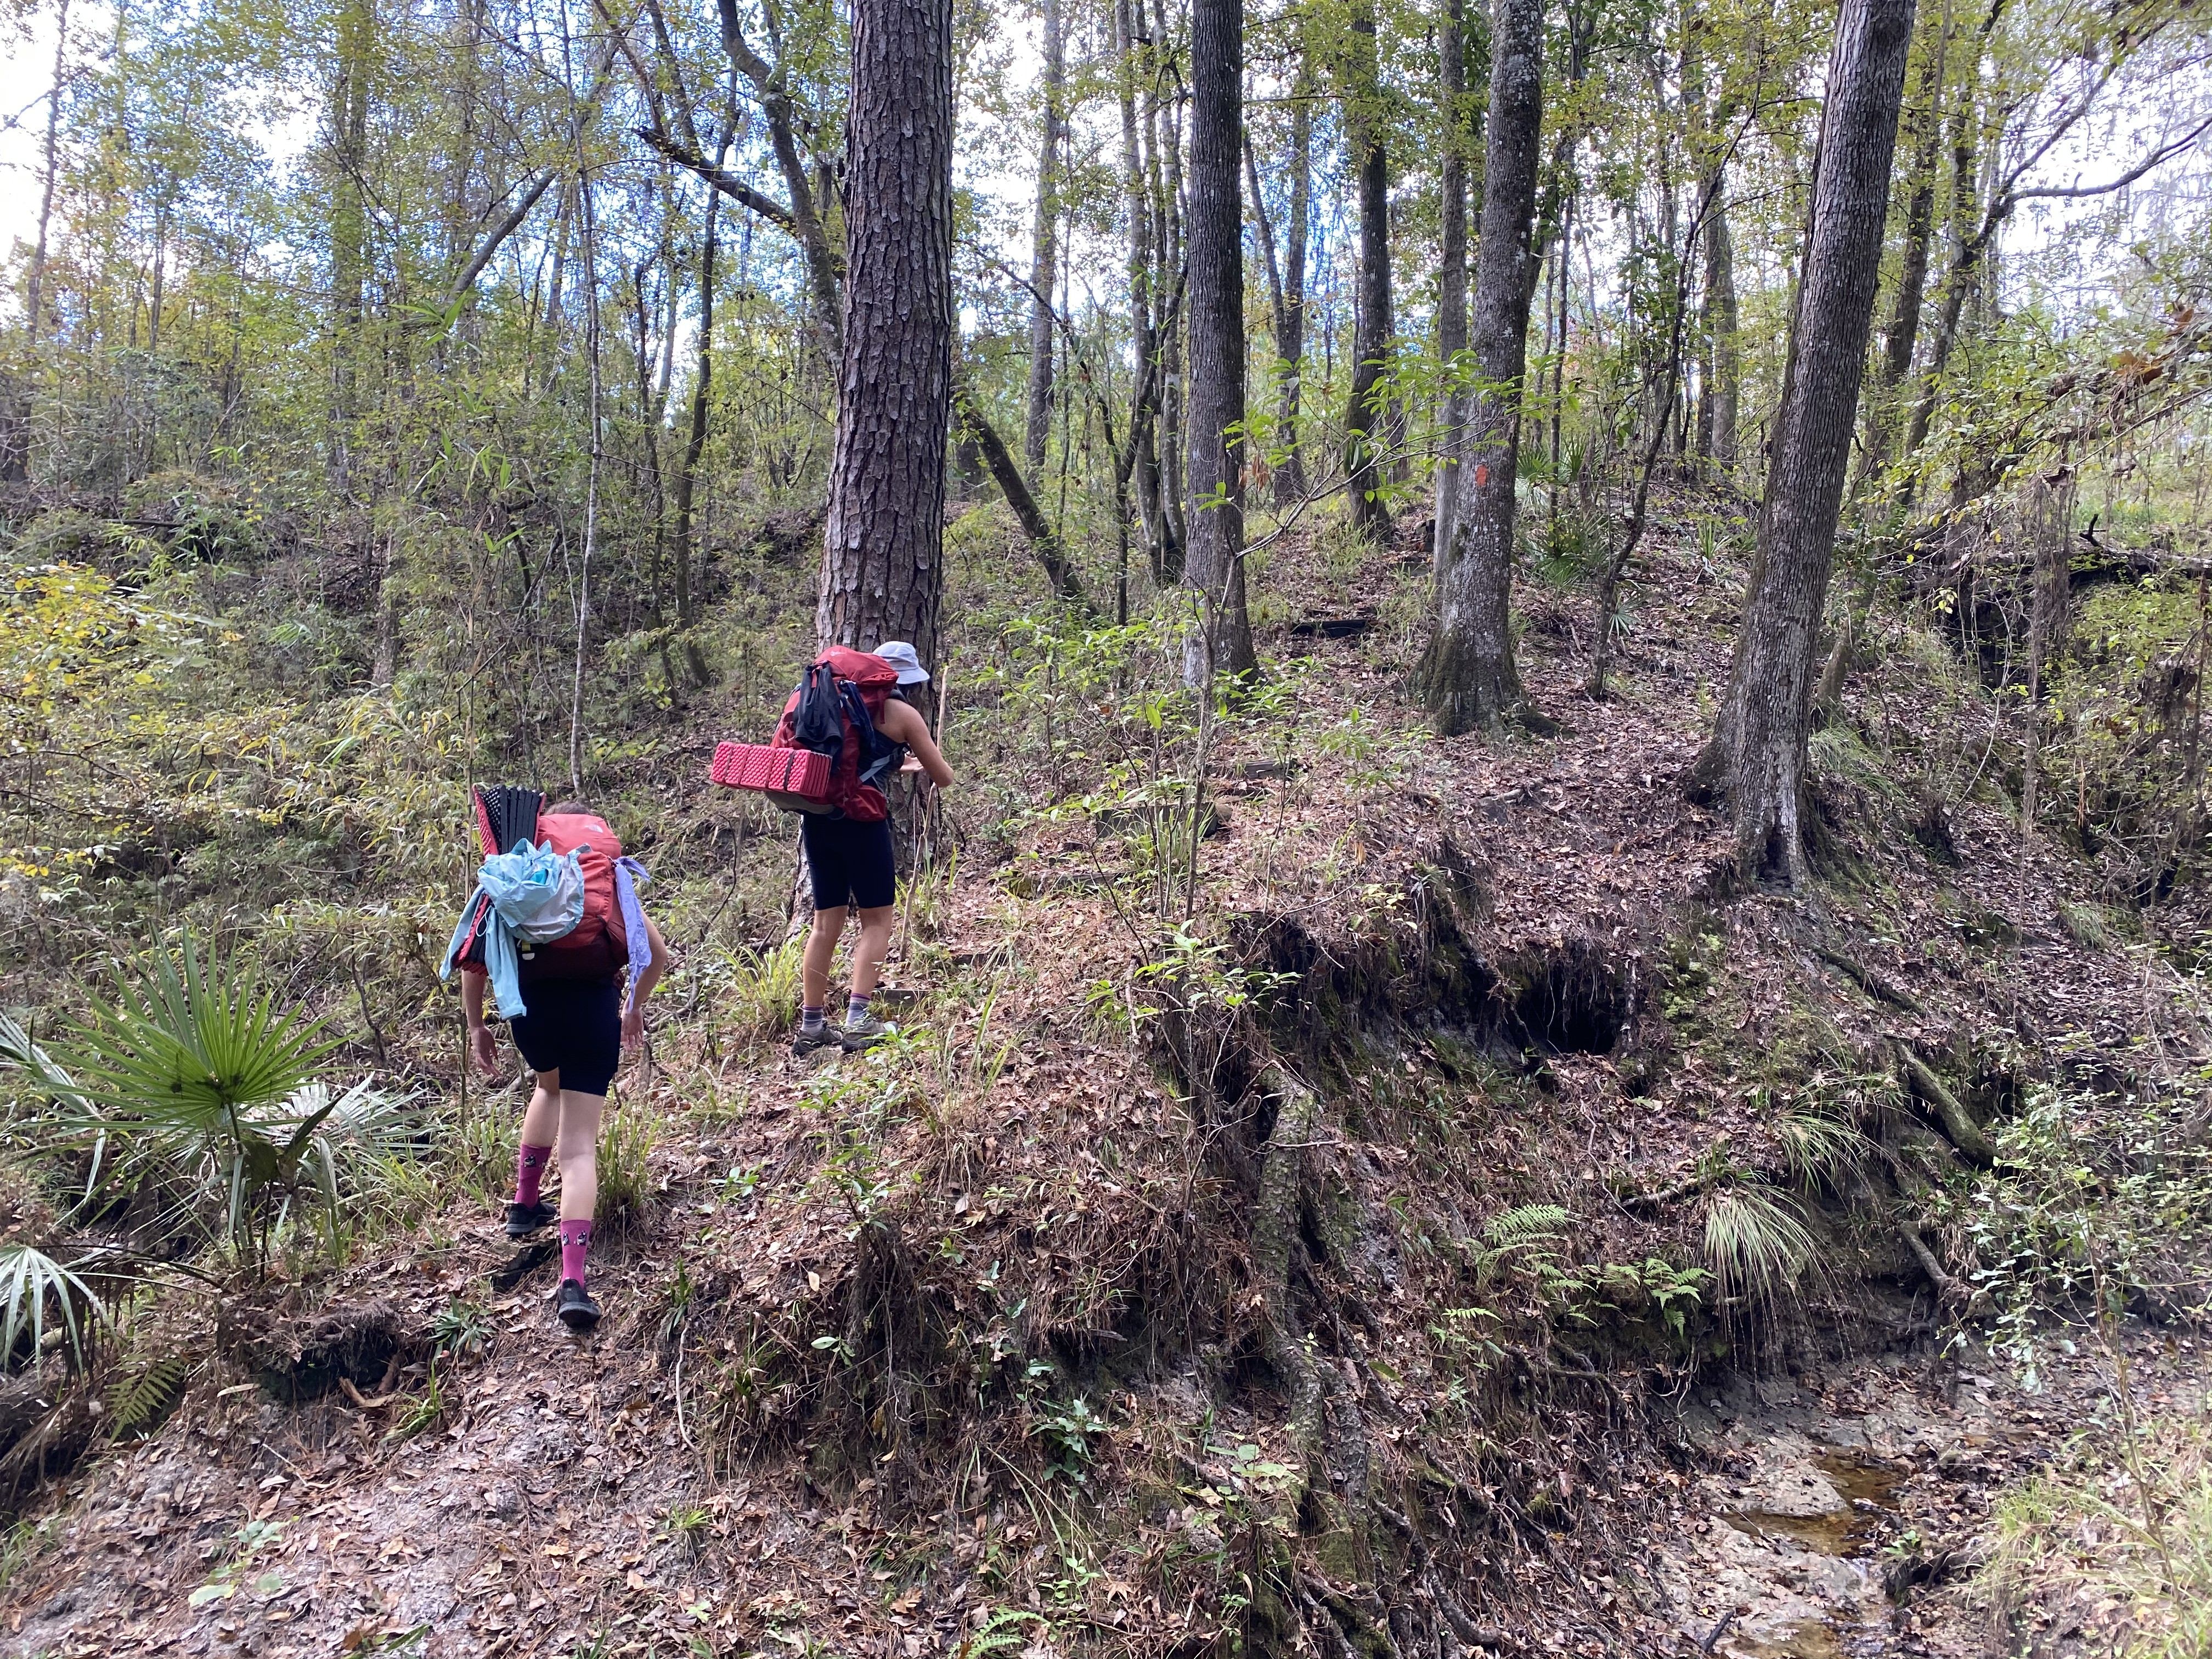 Two girls hike along the Florida trail near the suwannee river